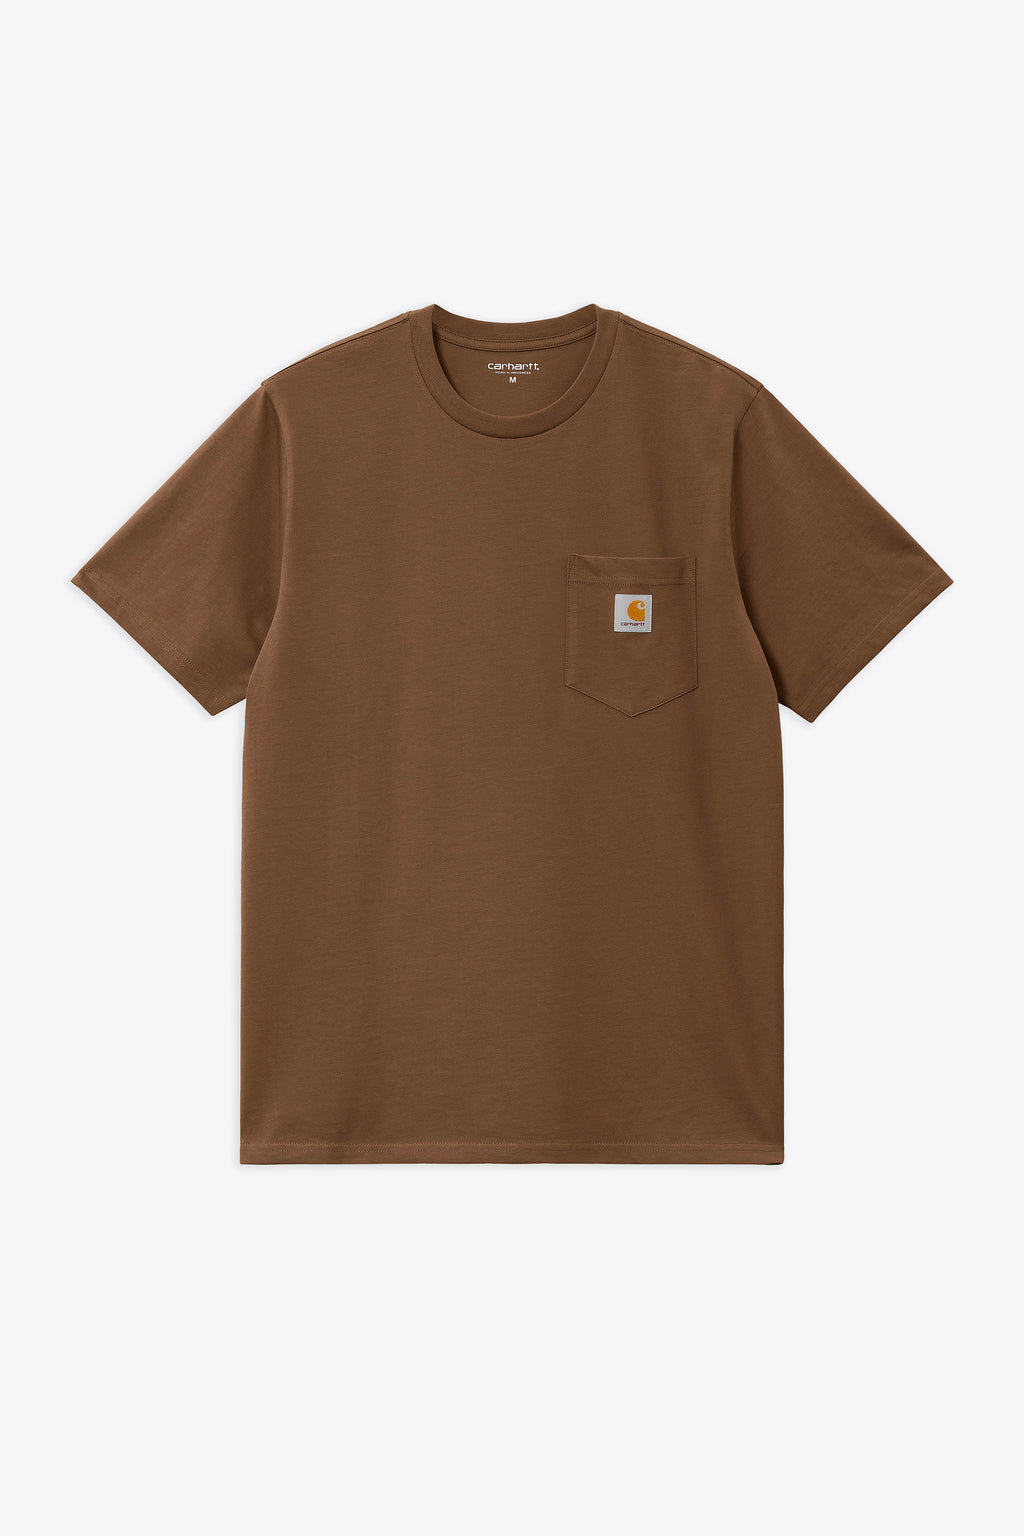 alt-image__Brown-cotton-t-shirt-with-chest-pocket---S/S-Pocket-T-Shirt-